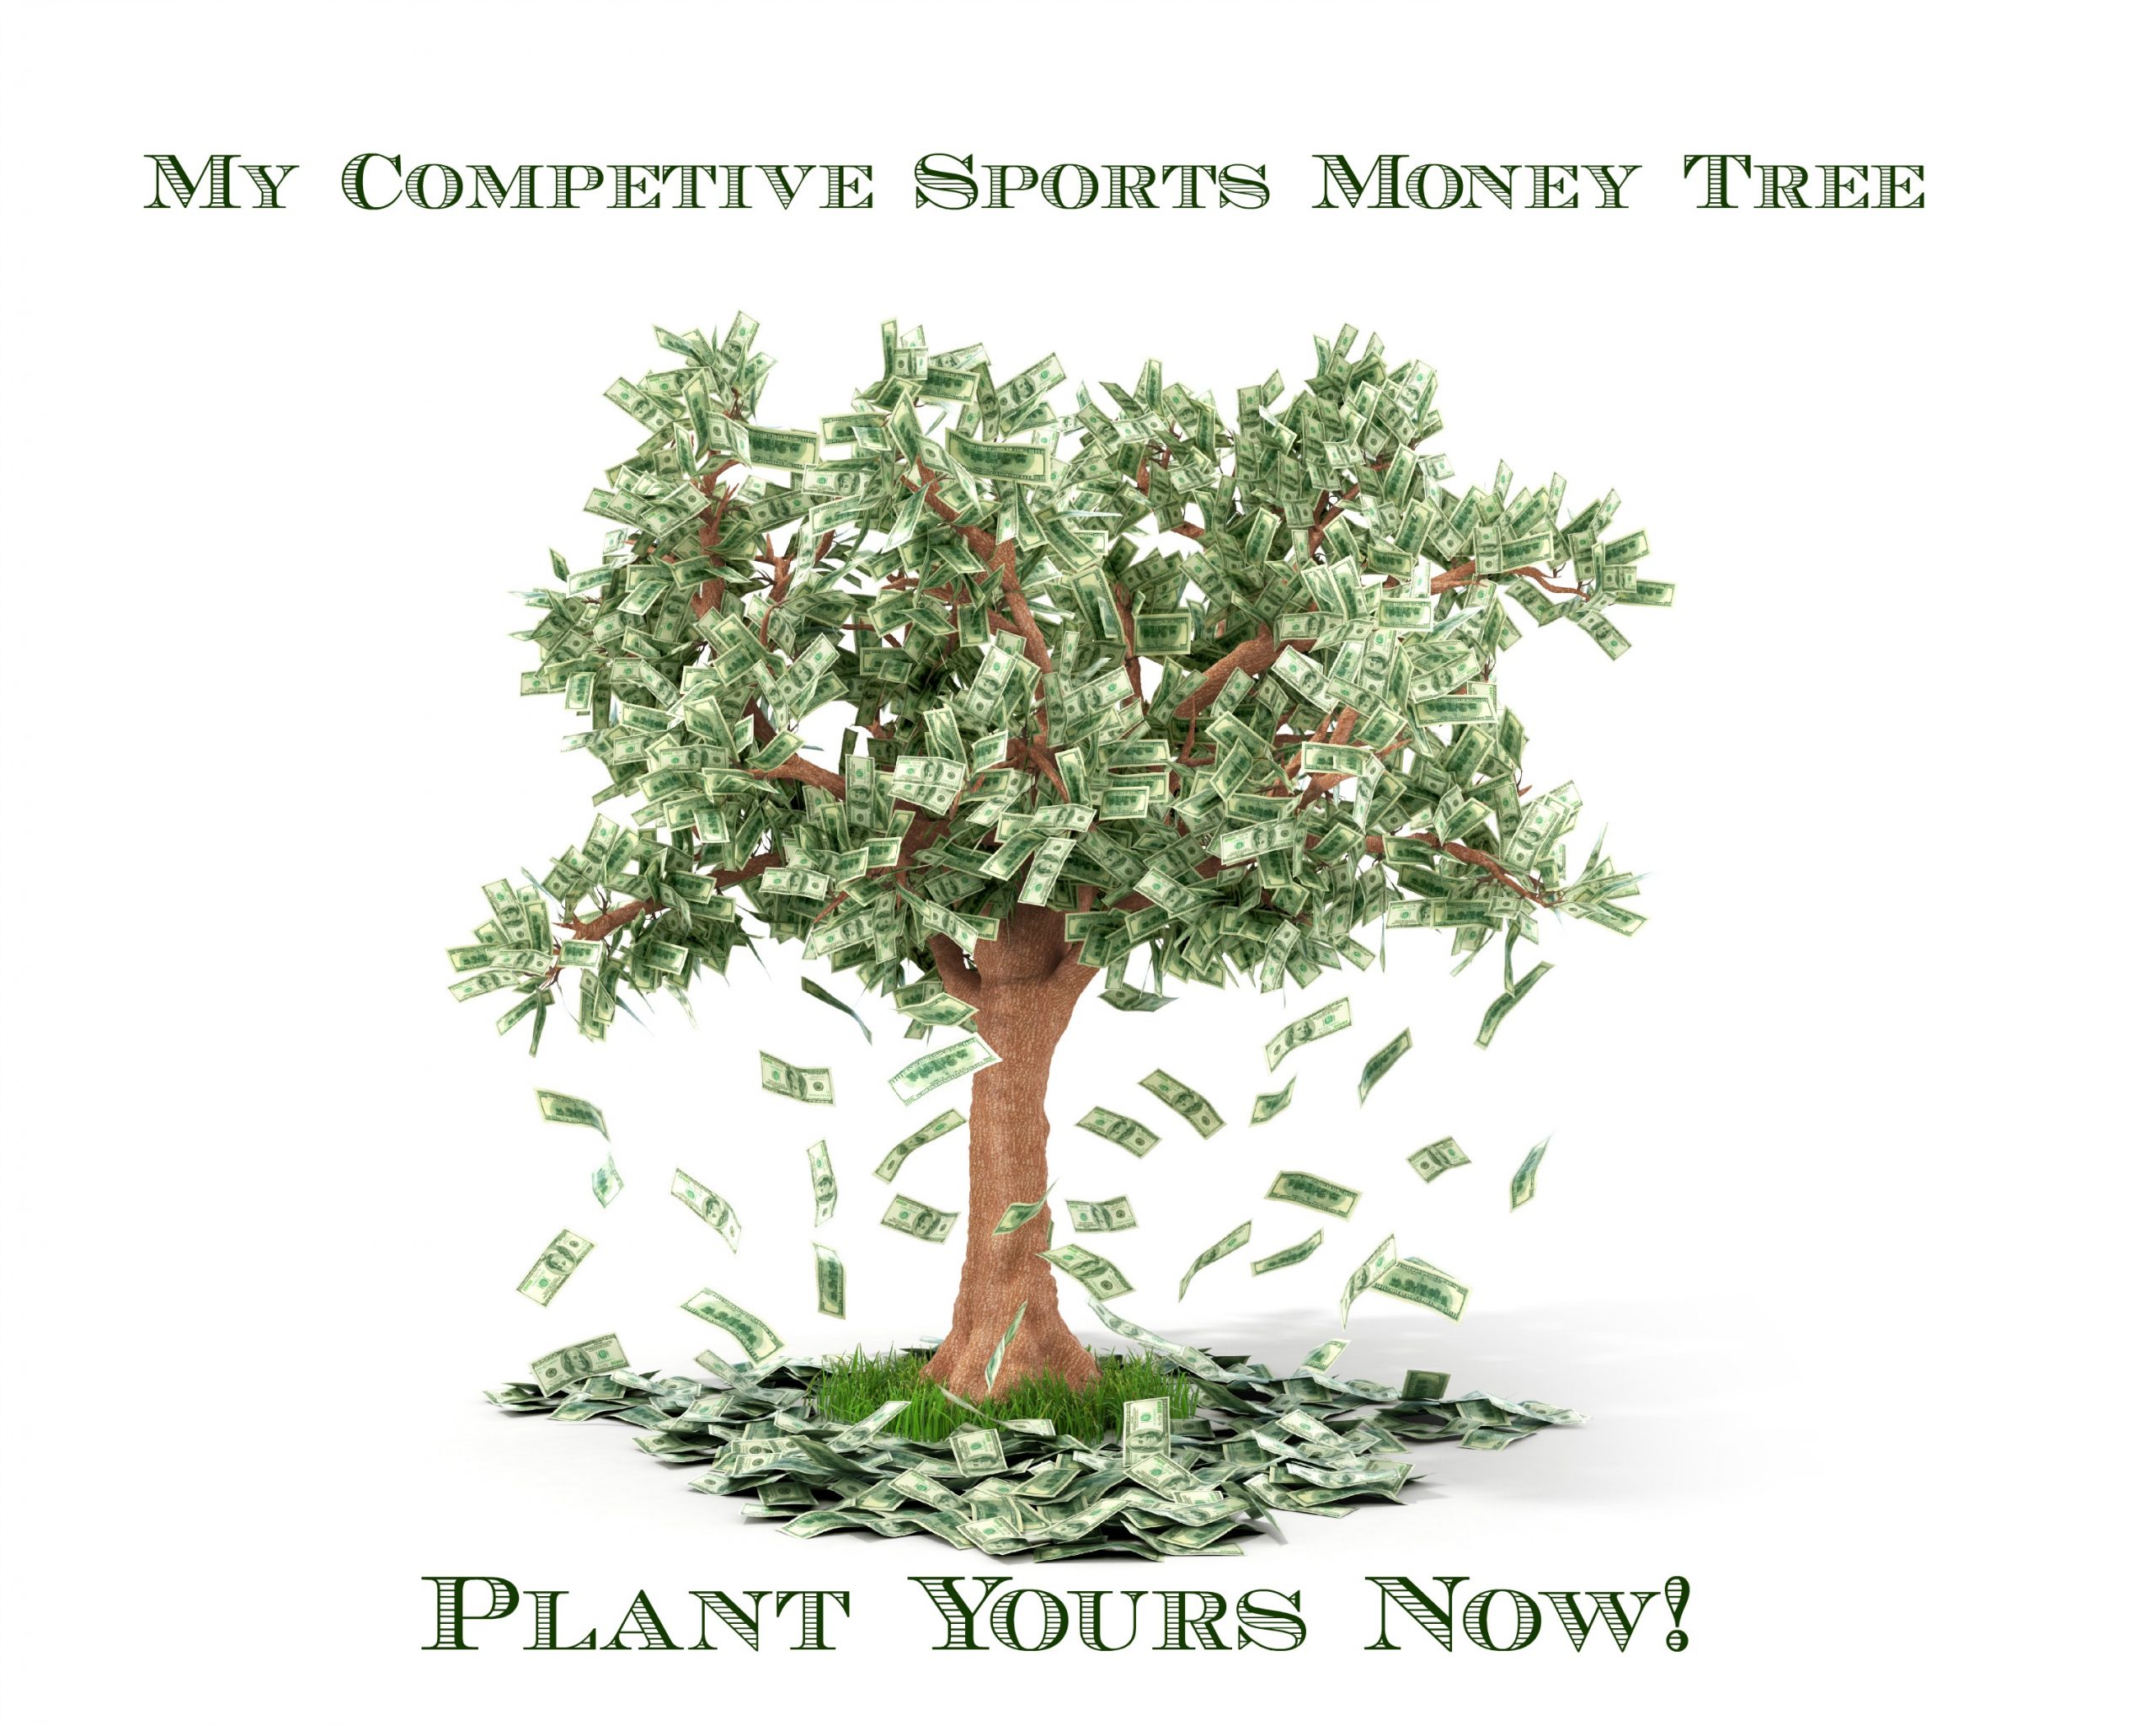 Plant Your Money Tree now for Competitve Sports